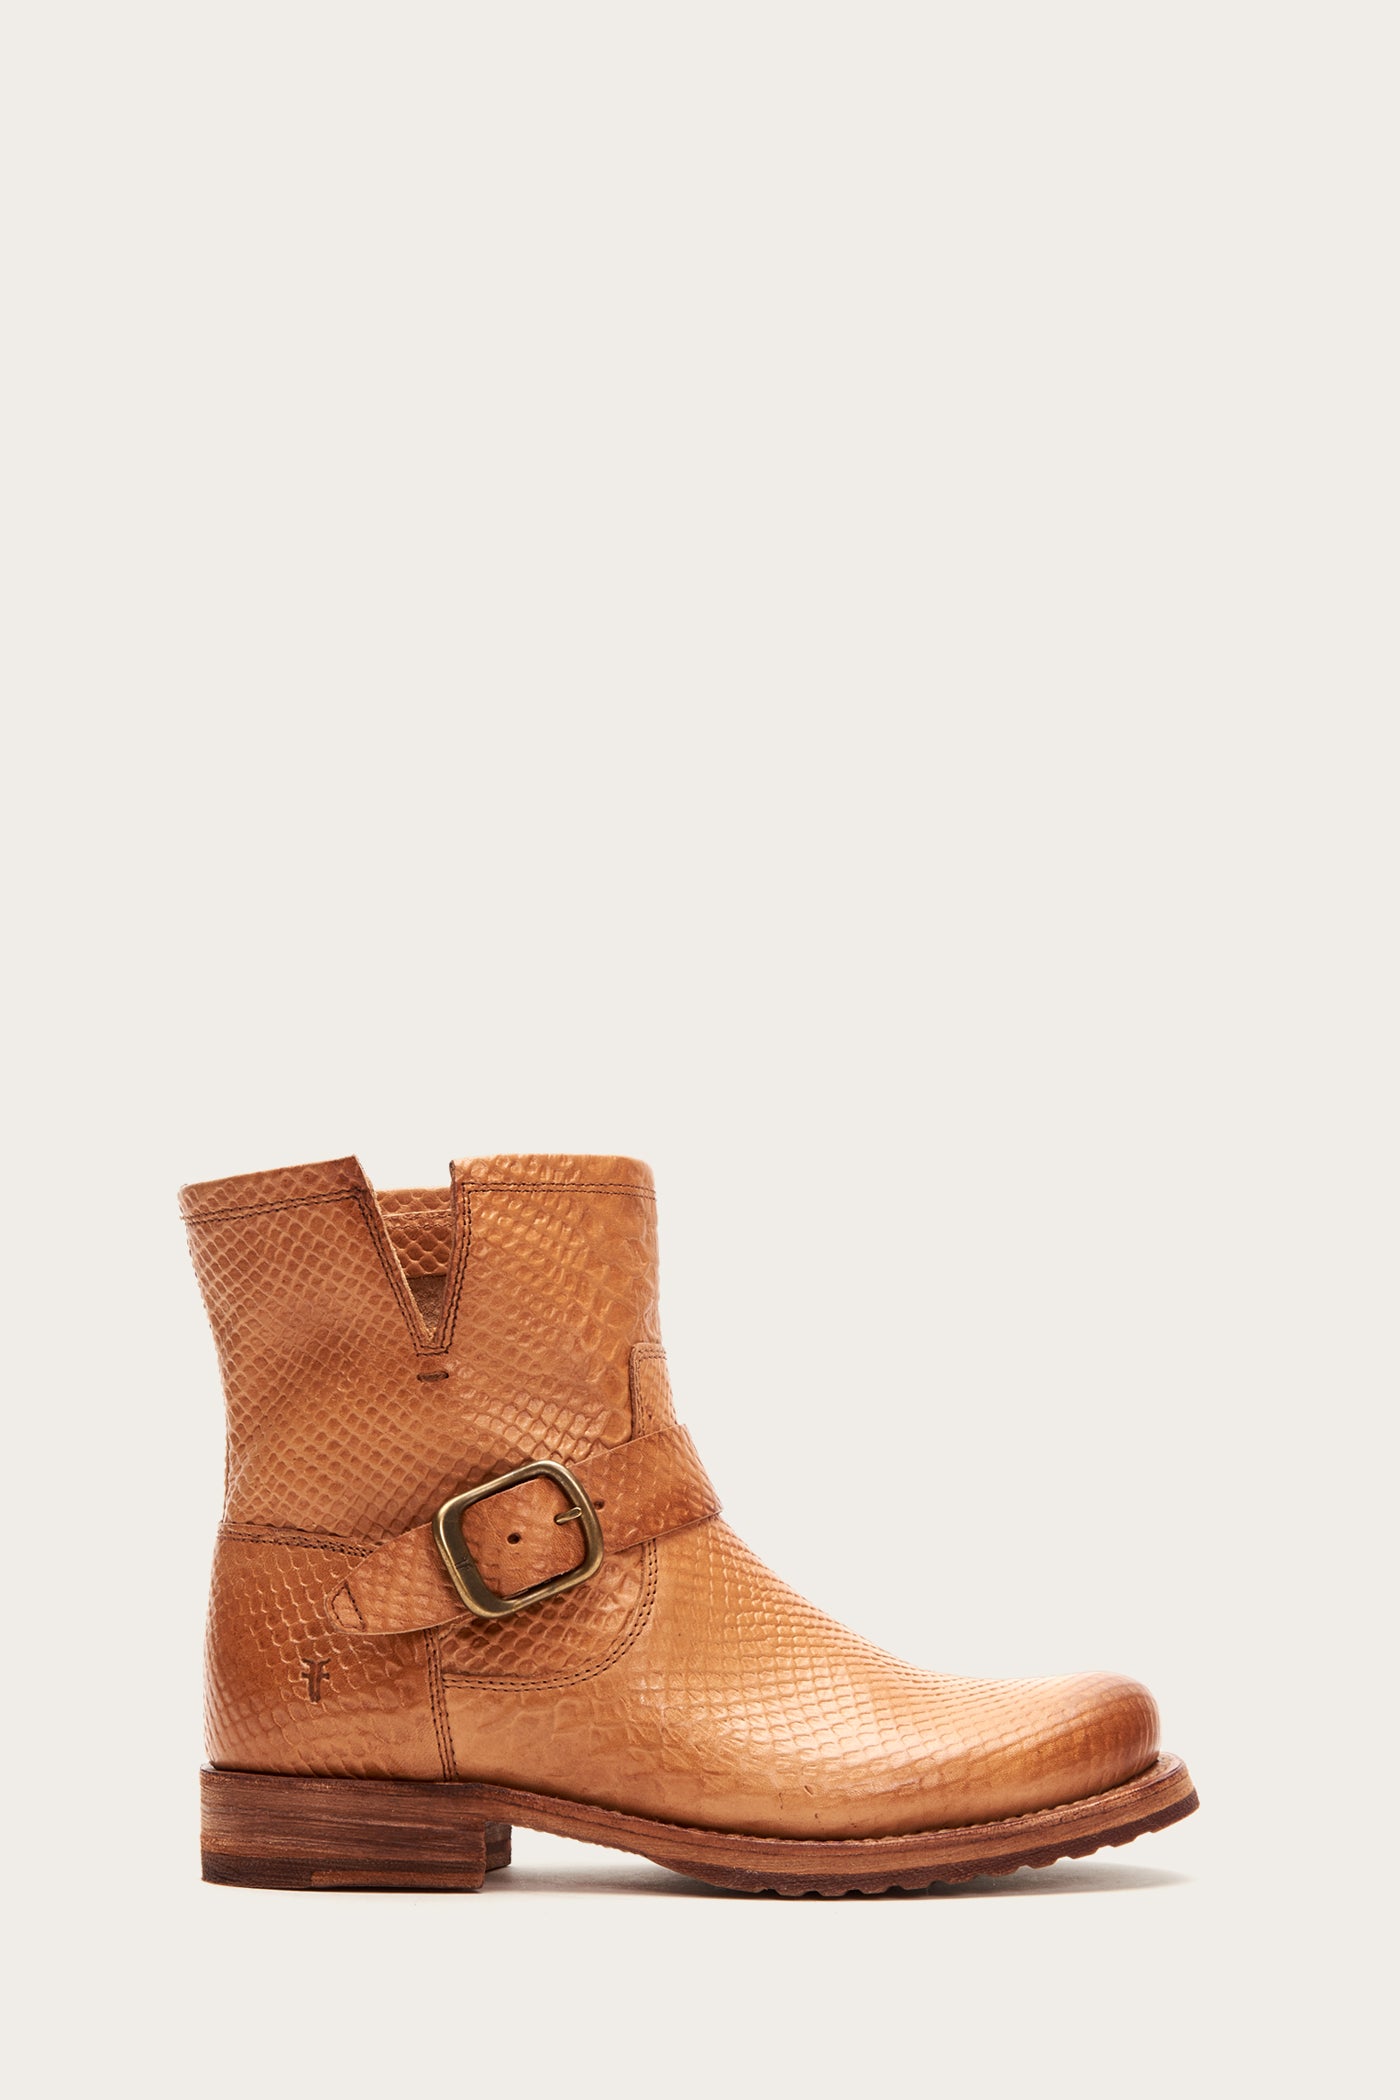 frye camel boots